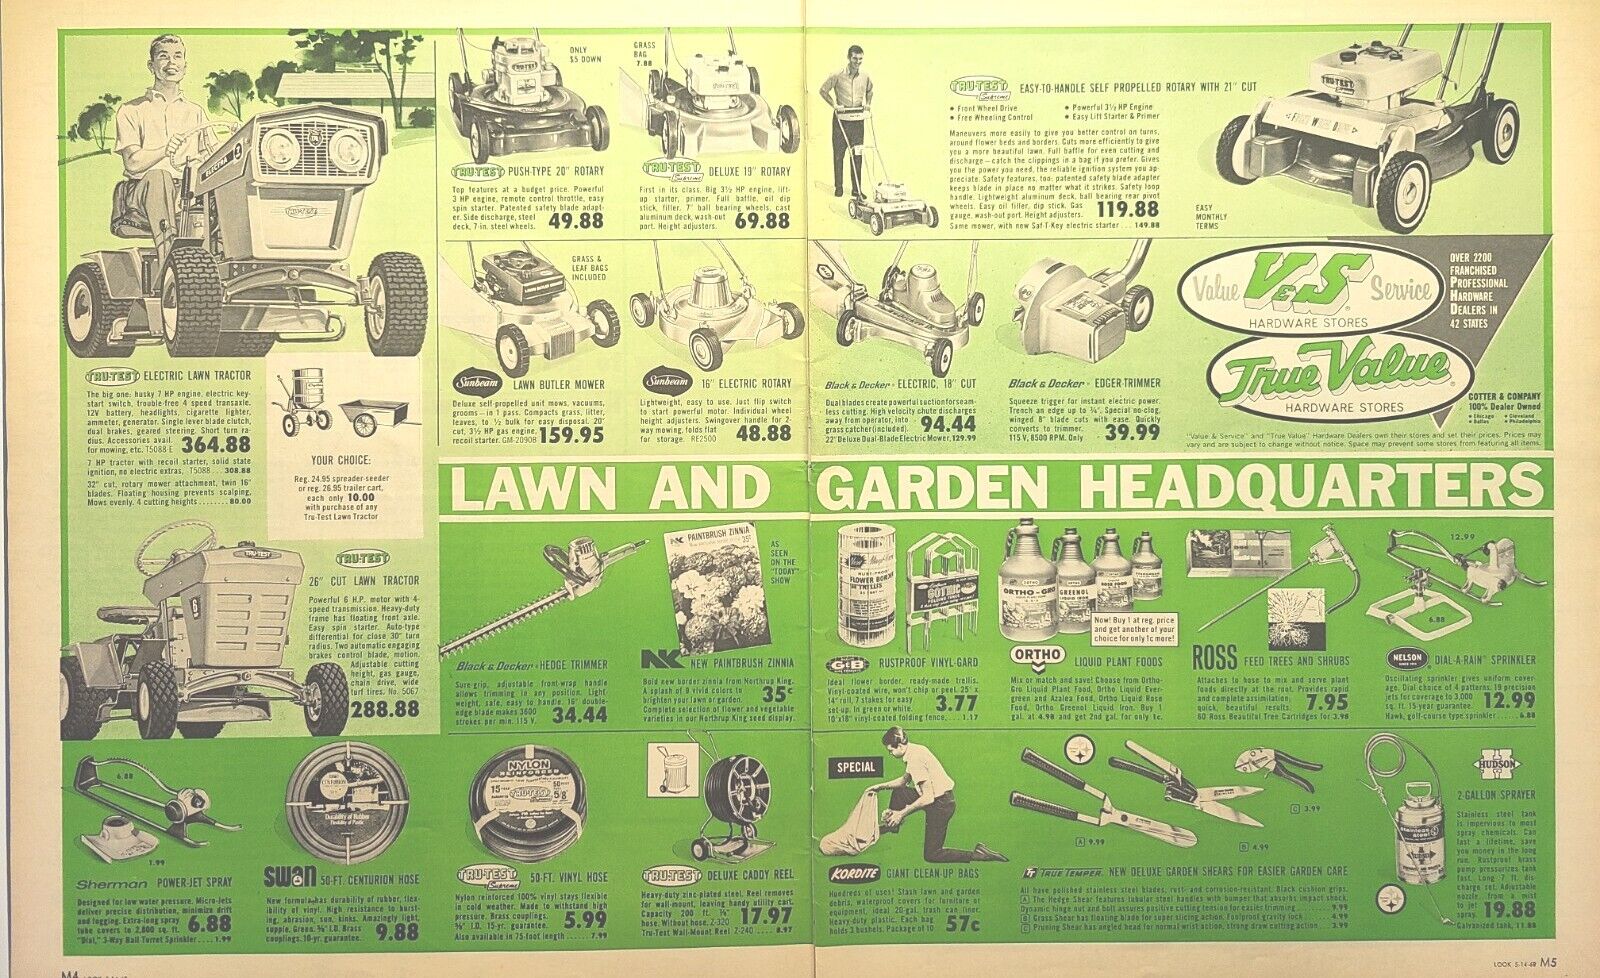 V&S True Value Hardware Stores Lawn & Garden Headquarters Vintage Print Ad 1968